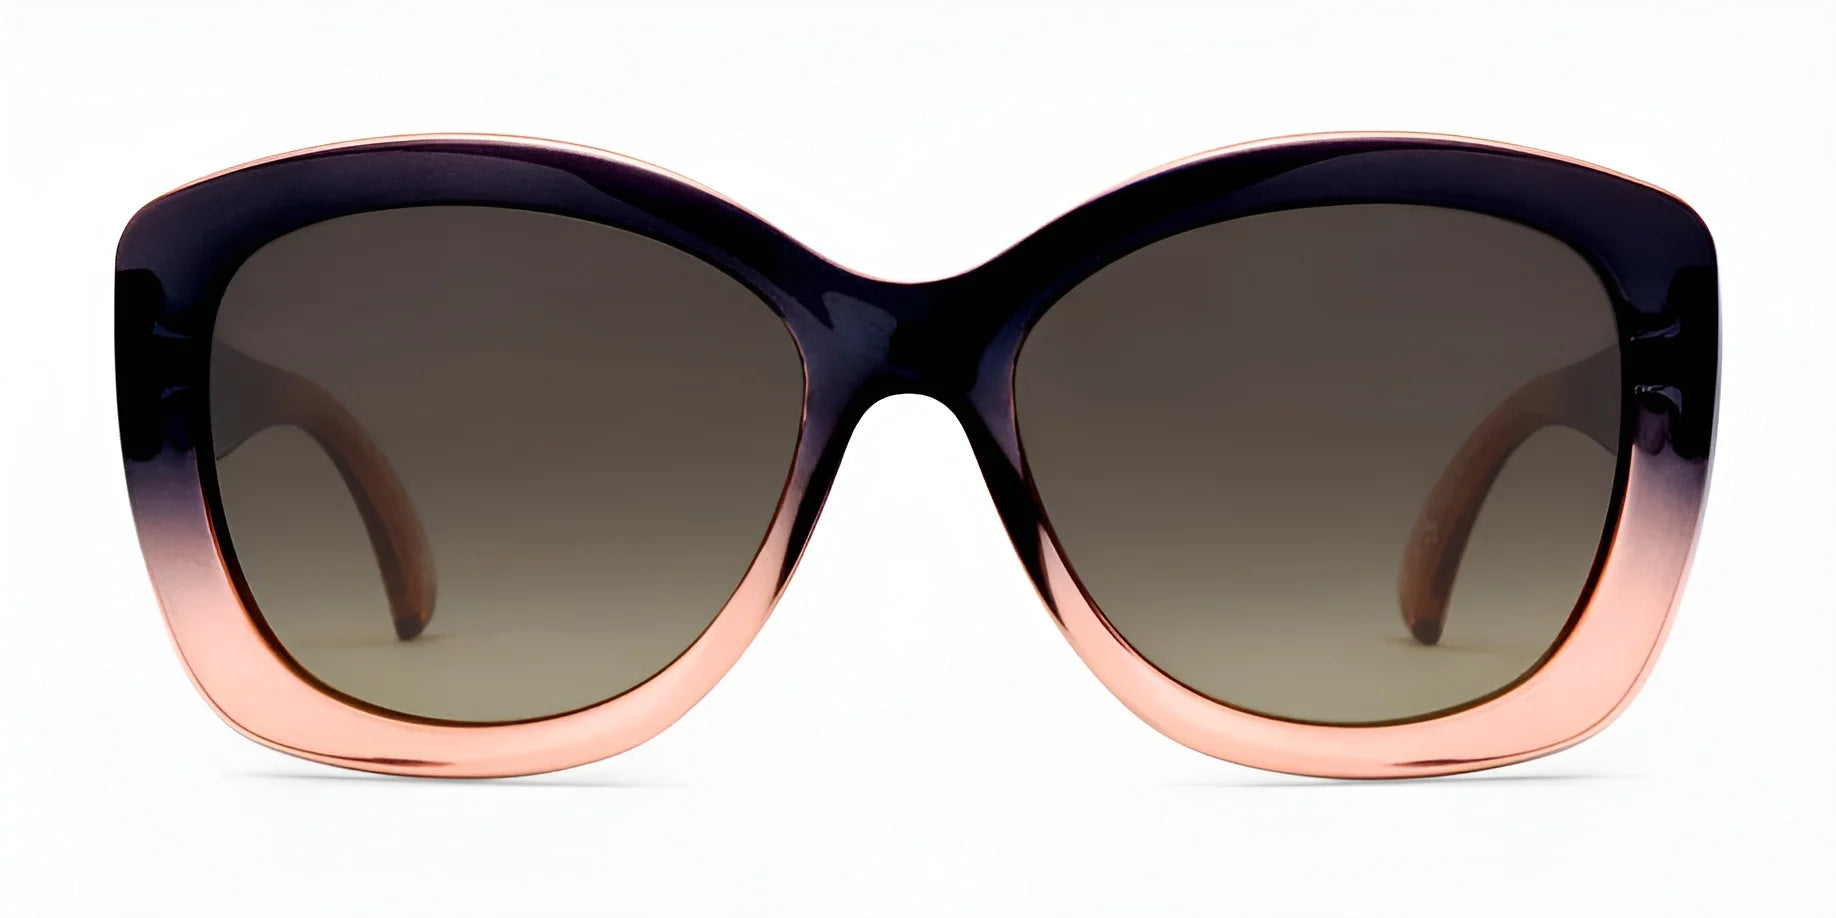 Electric Gaviota Sunglasses Contour / Black Gradient